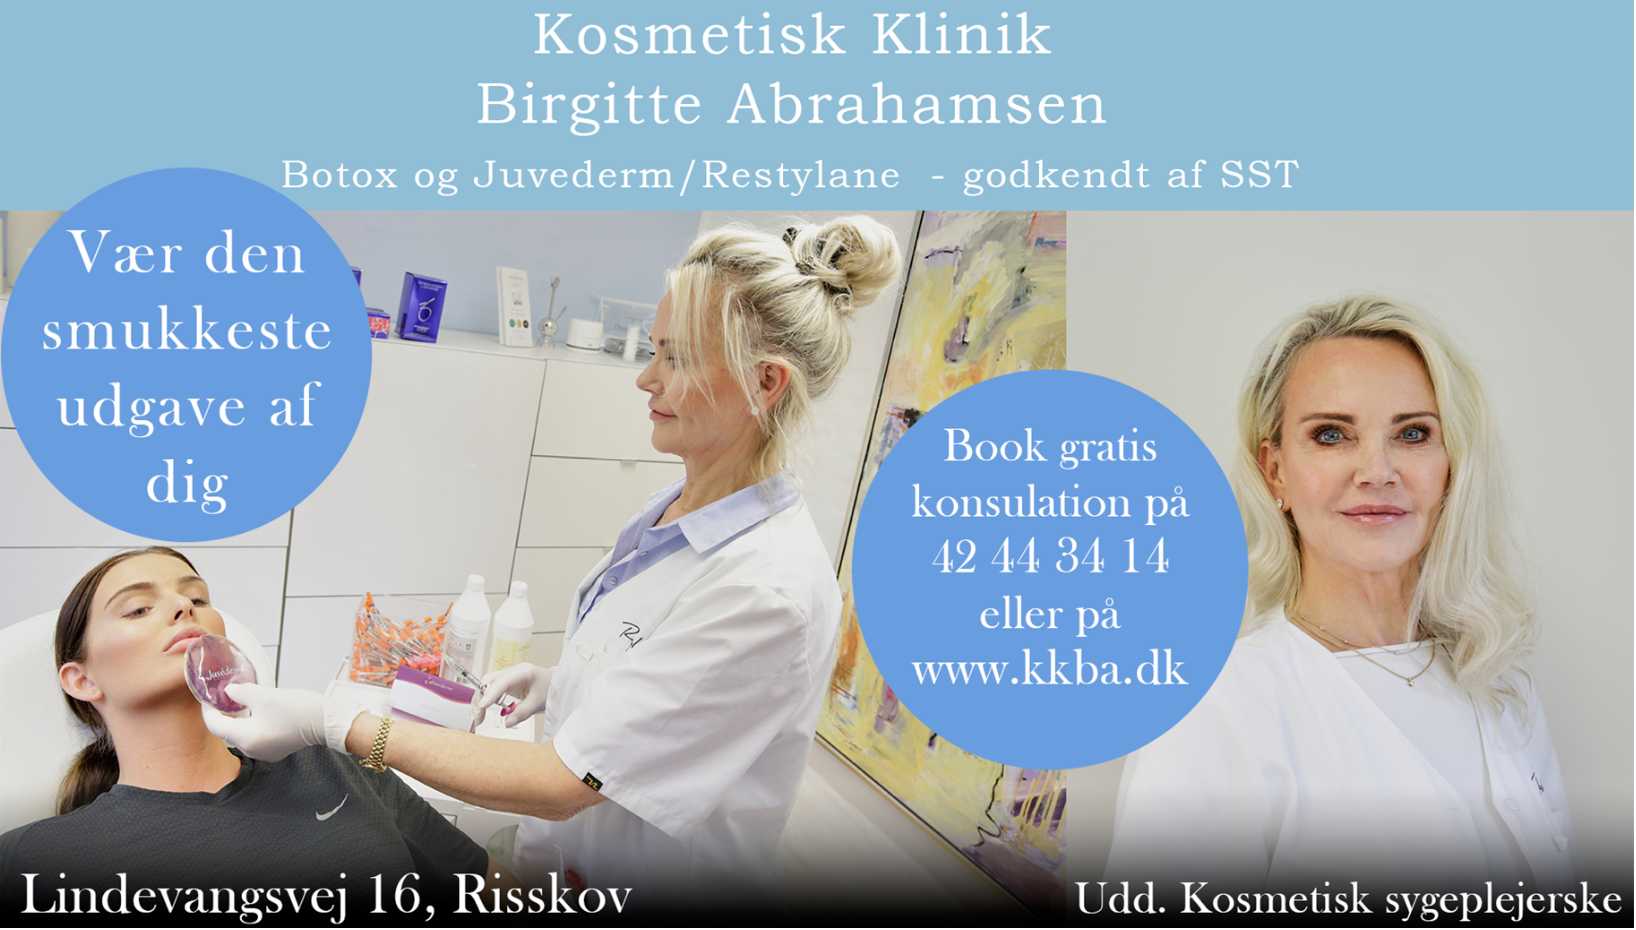 Kosmetisk Klinik v/Birgitte Abrahamsen